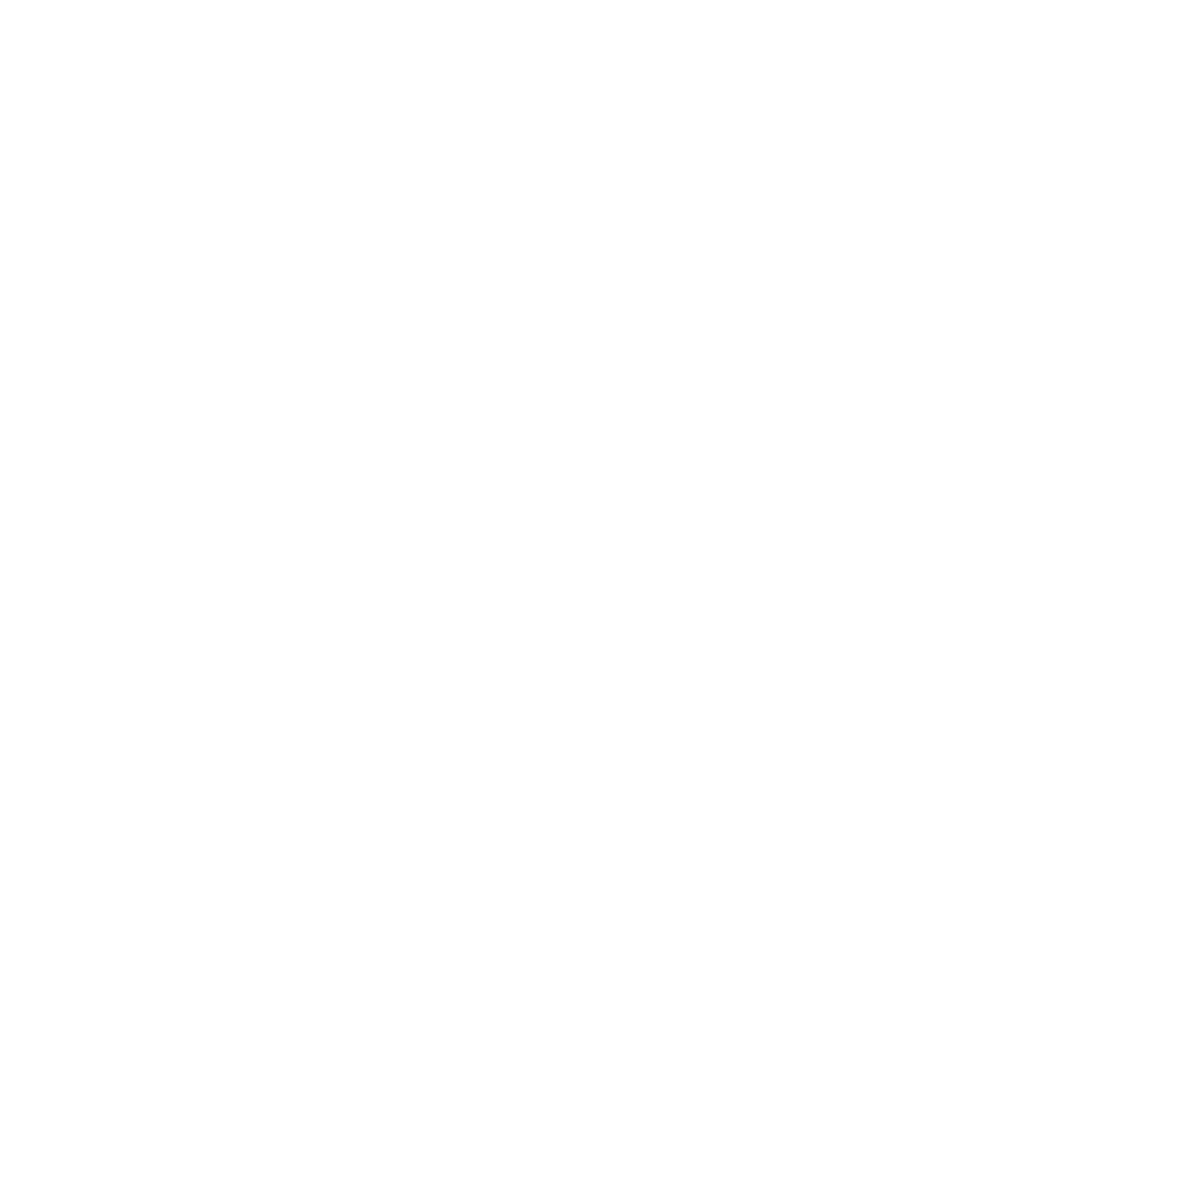 Food Trucks Norge